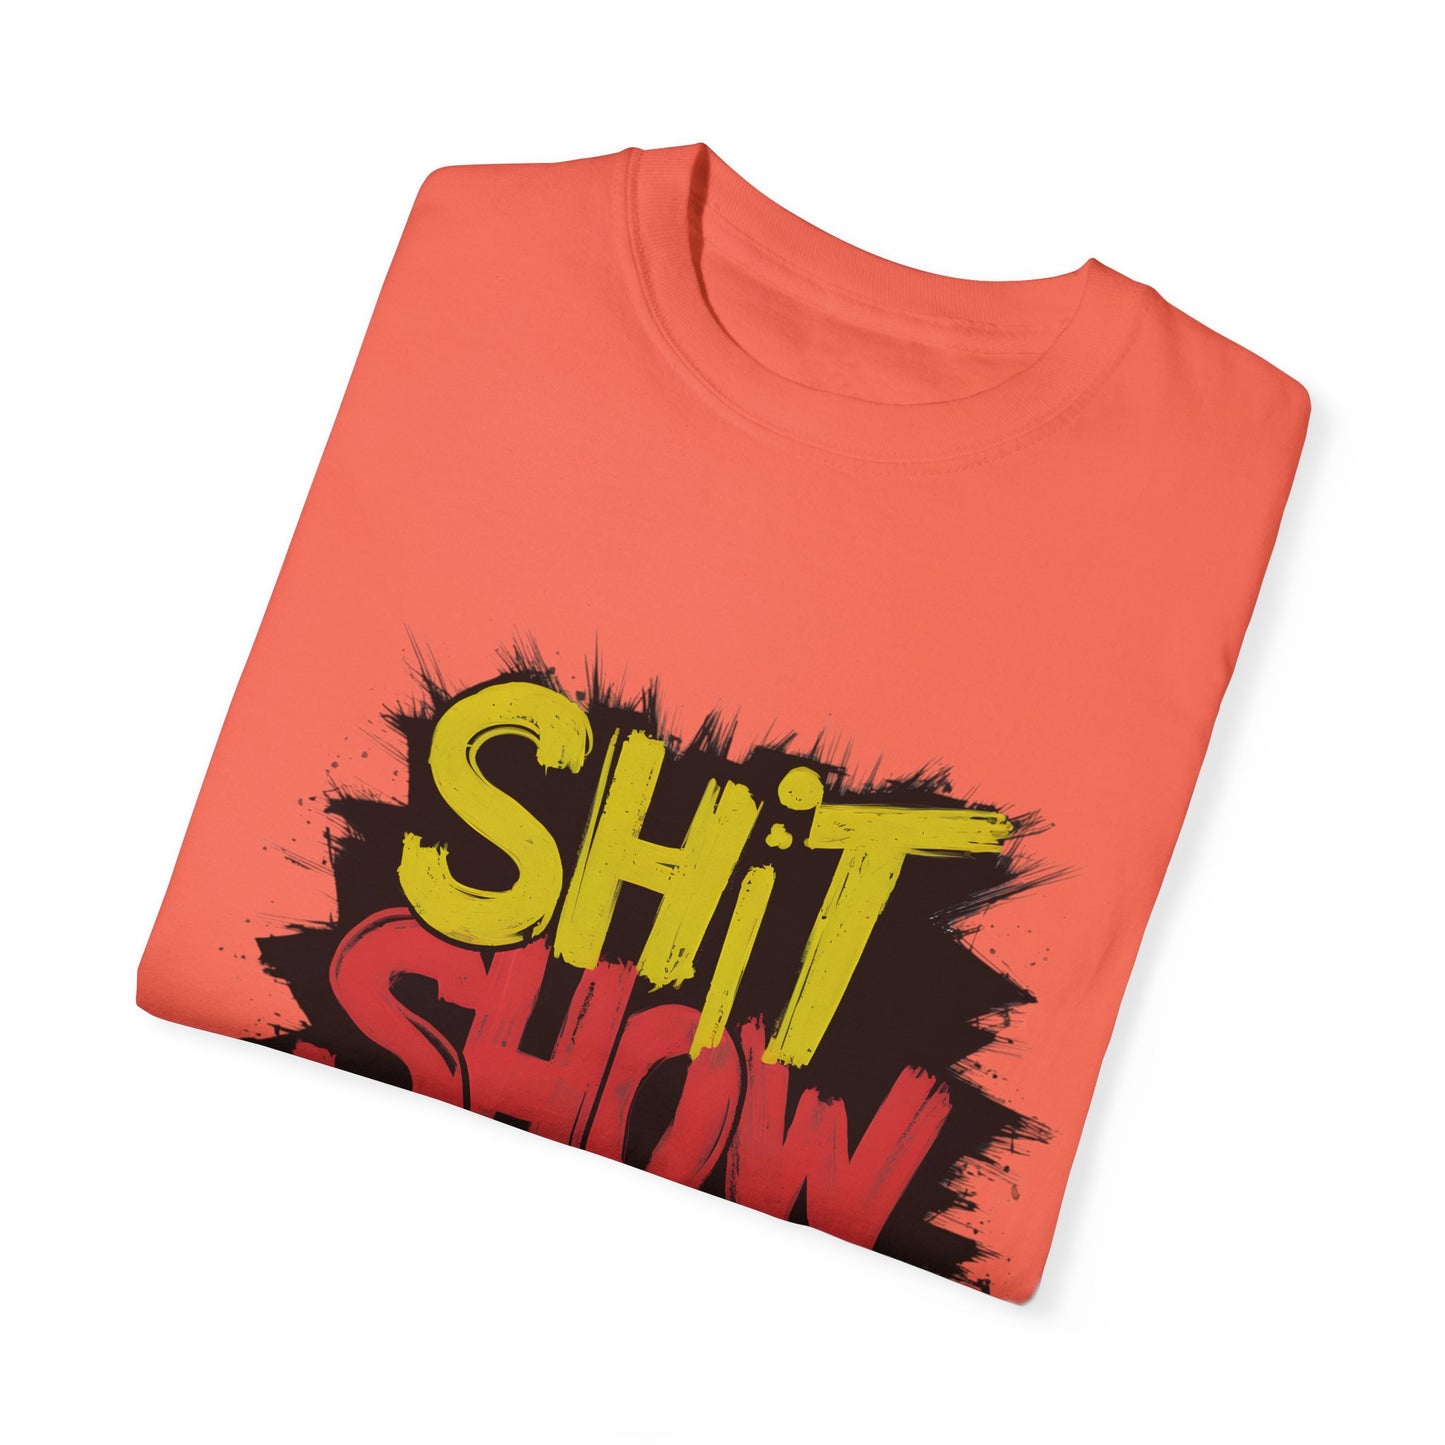 Shit Show Supervisor Urban Sarcastic Graphic Unisex Garment Dyed T-shirt Cotton Funny Humorous Graphic Soft Premium Unisex Men Women Bright Salmon T-shirt Birthday Gift-32